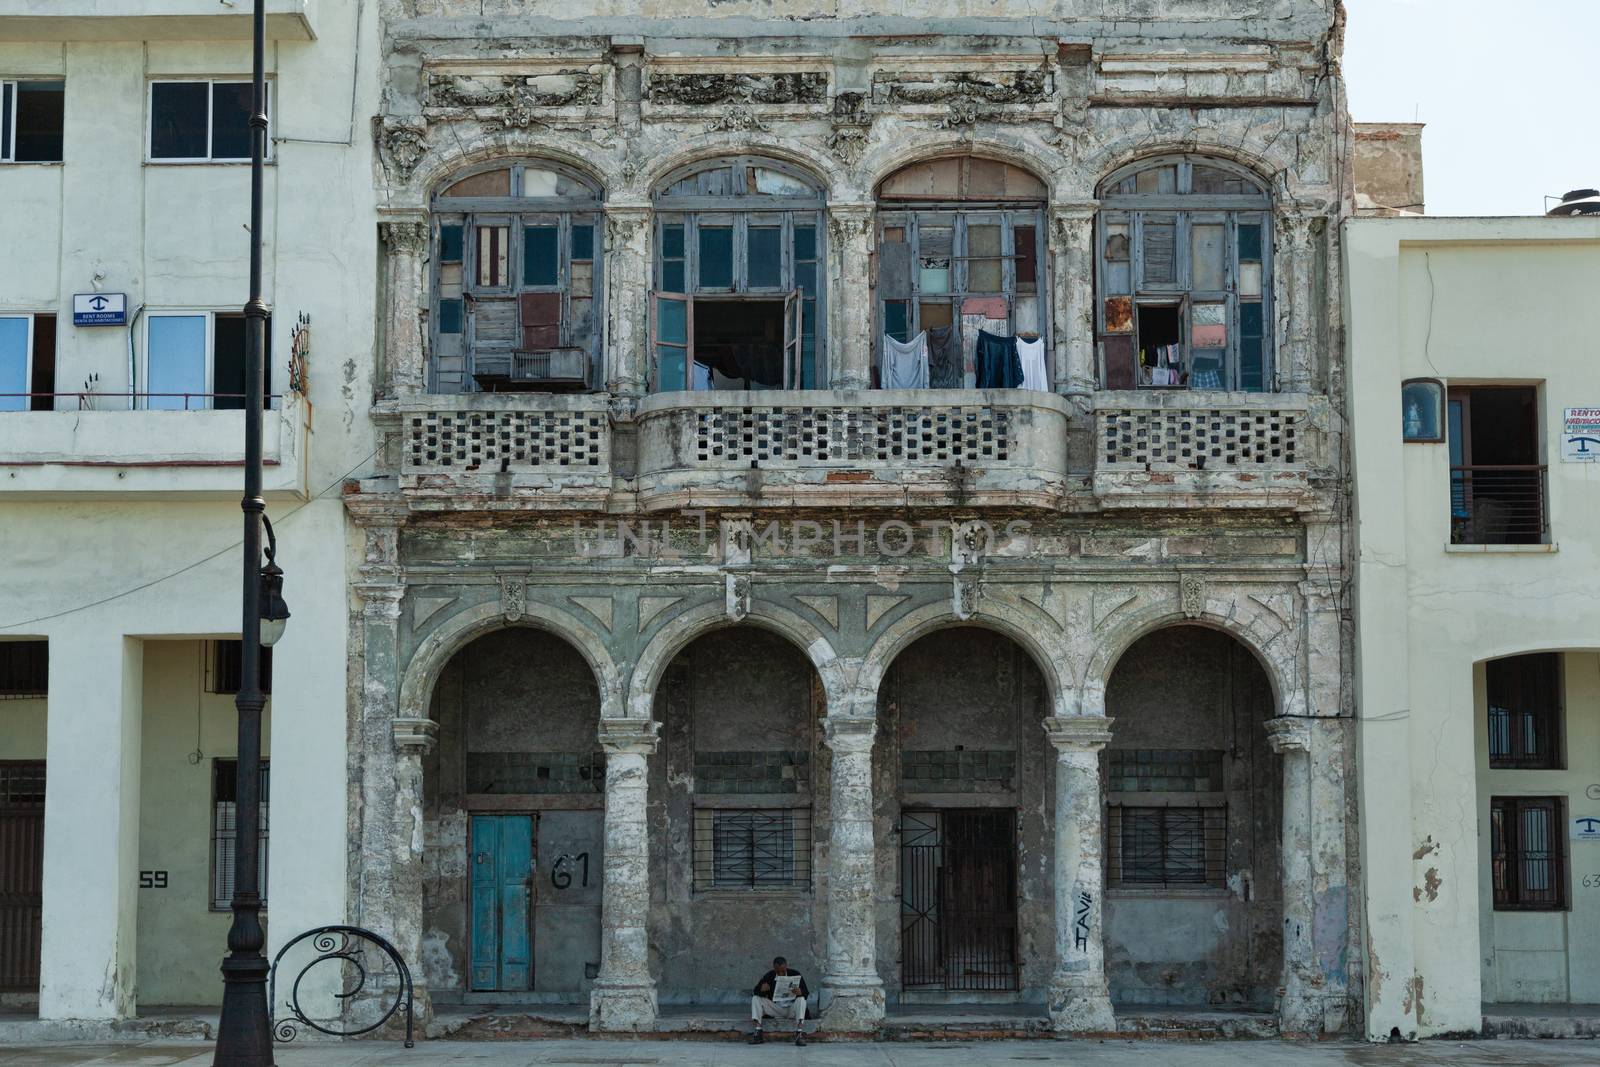 Architecture of Havana, Cuba by vlad-m